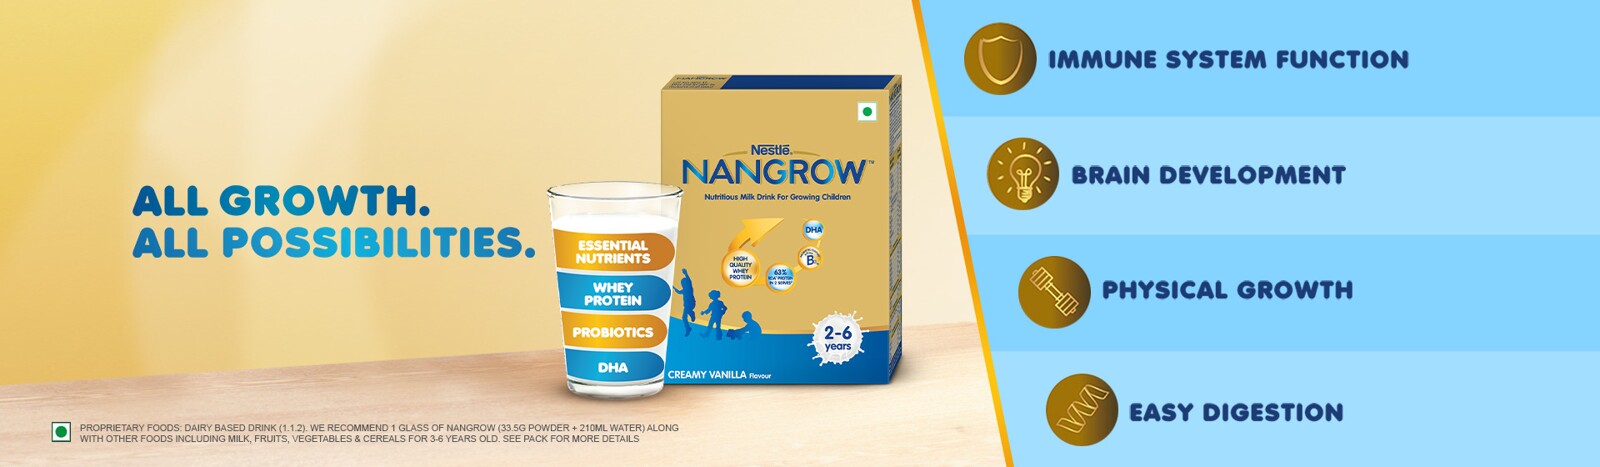 nangrow benefits